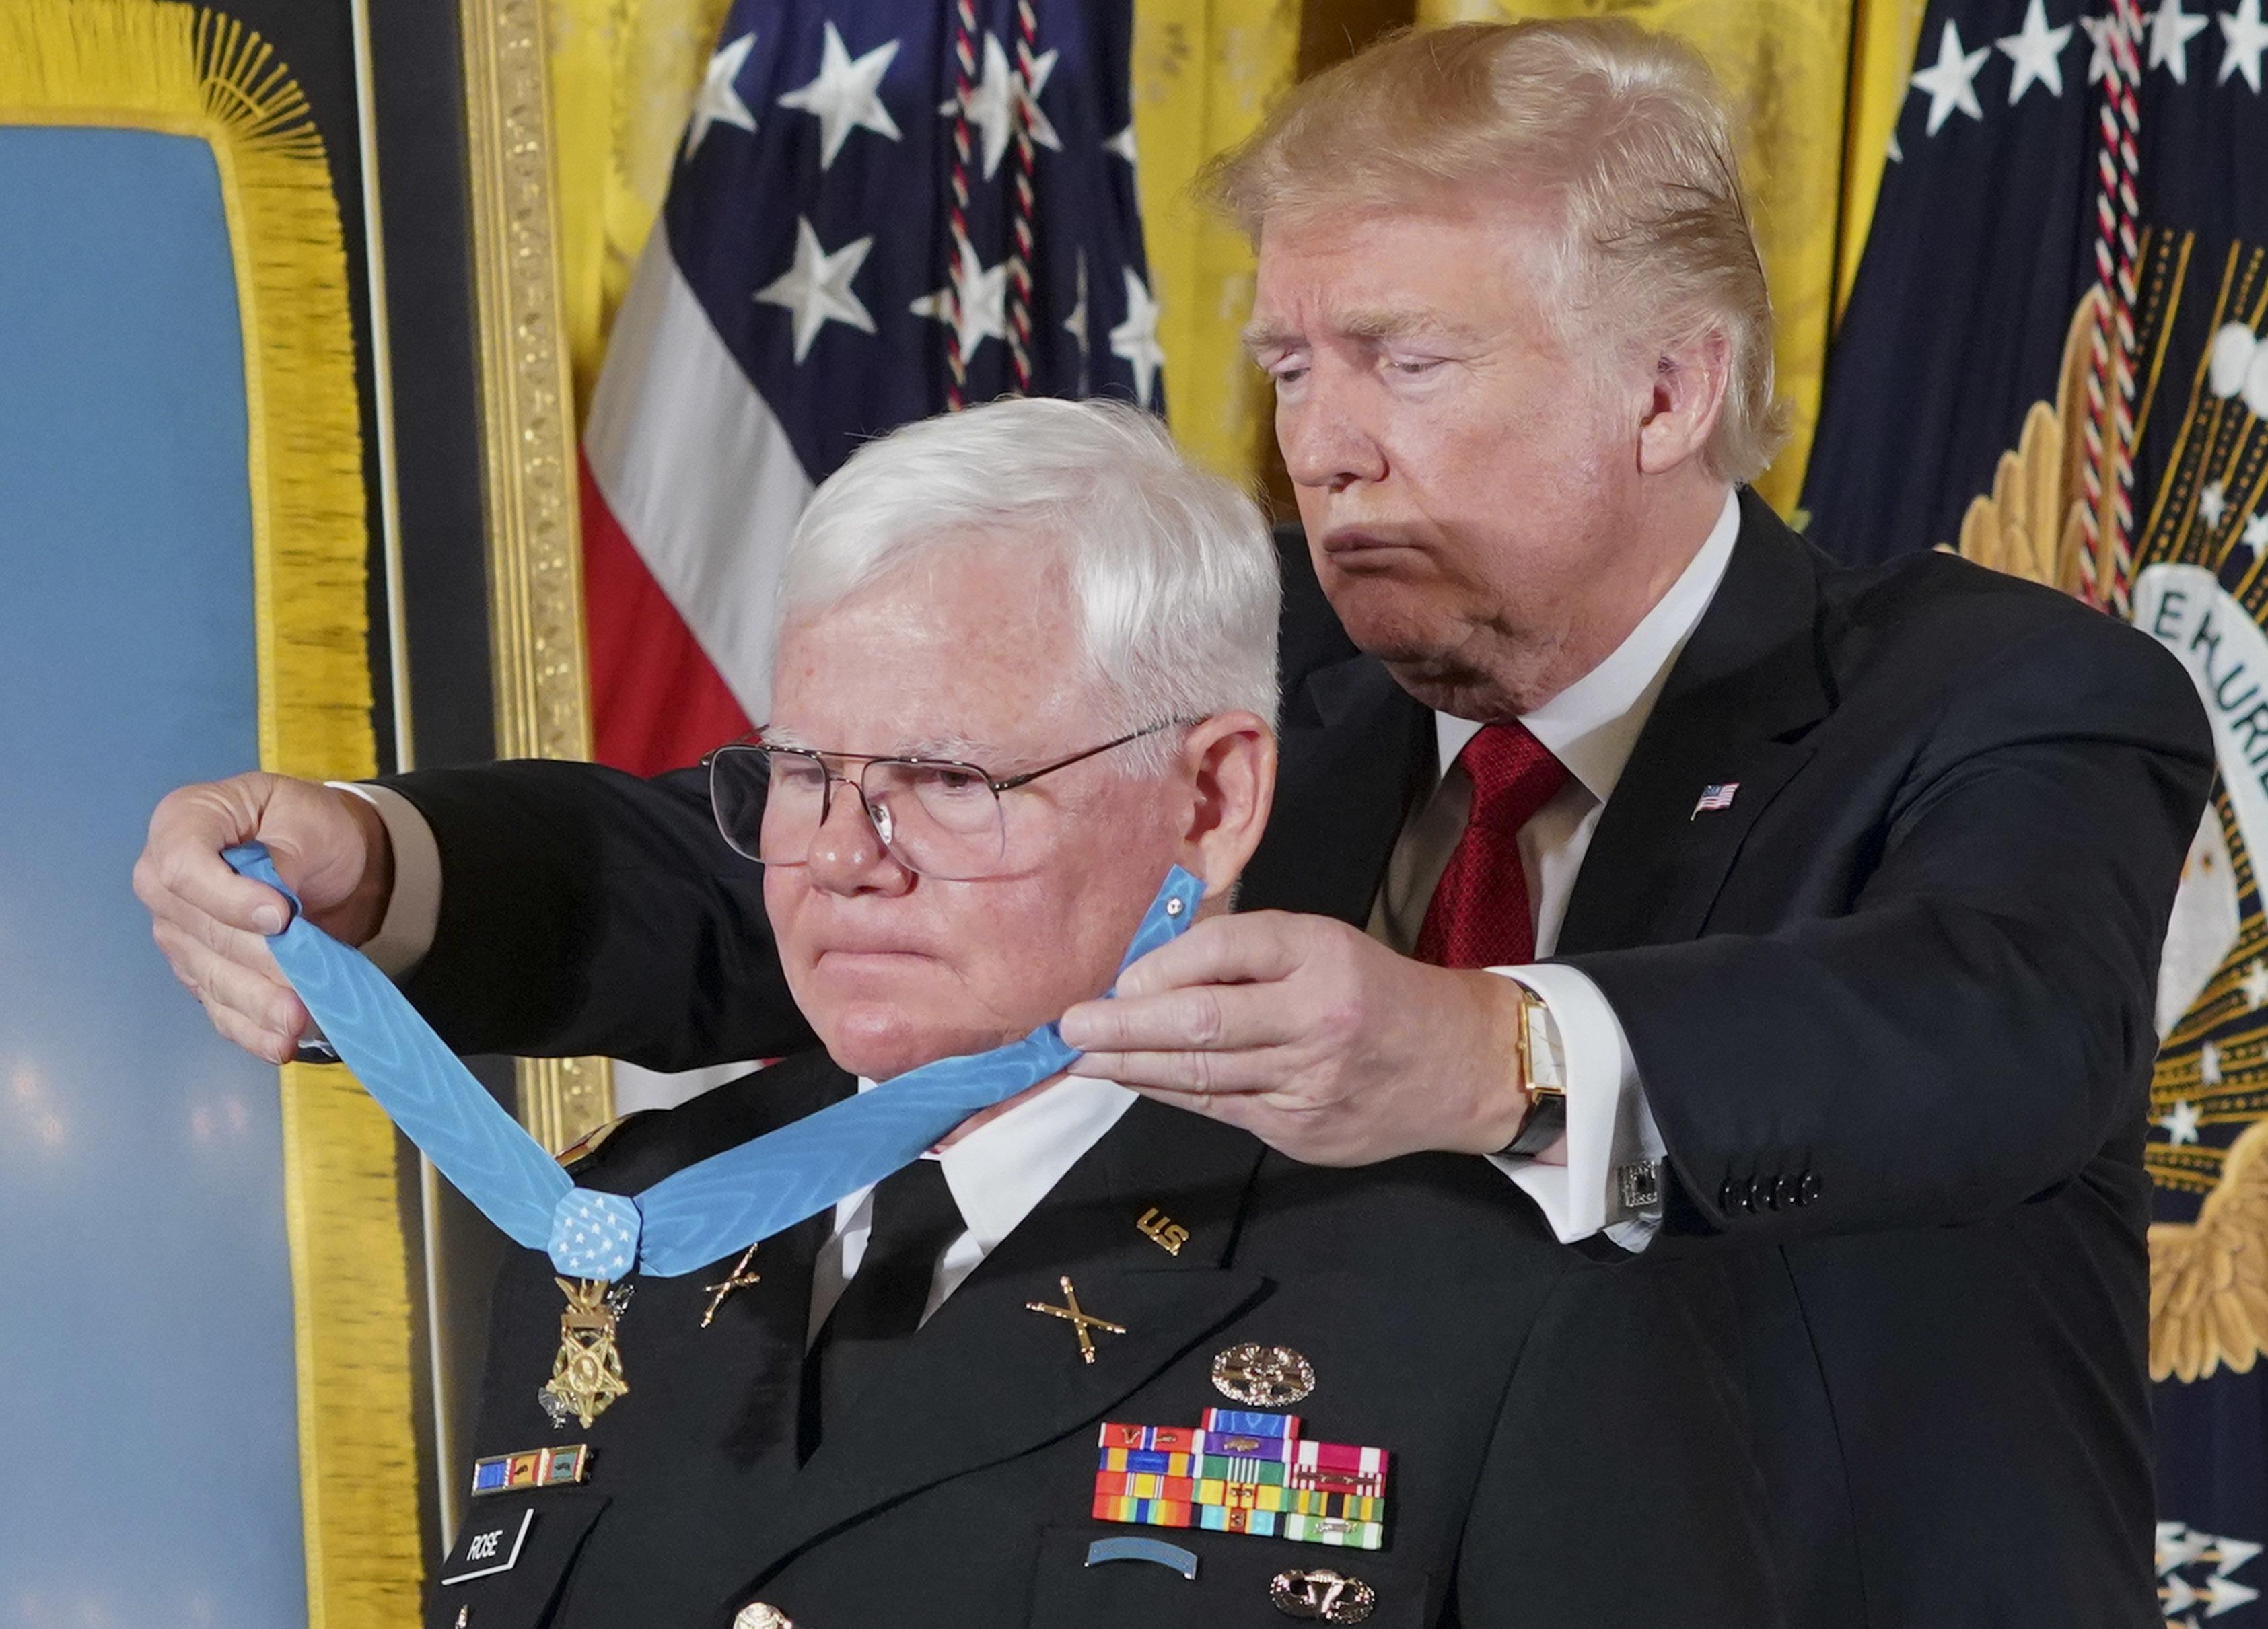 Trump awards Medal of Honor to Vietnamera Army medic The Spokesman